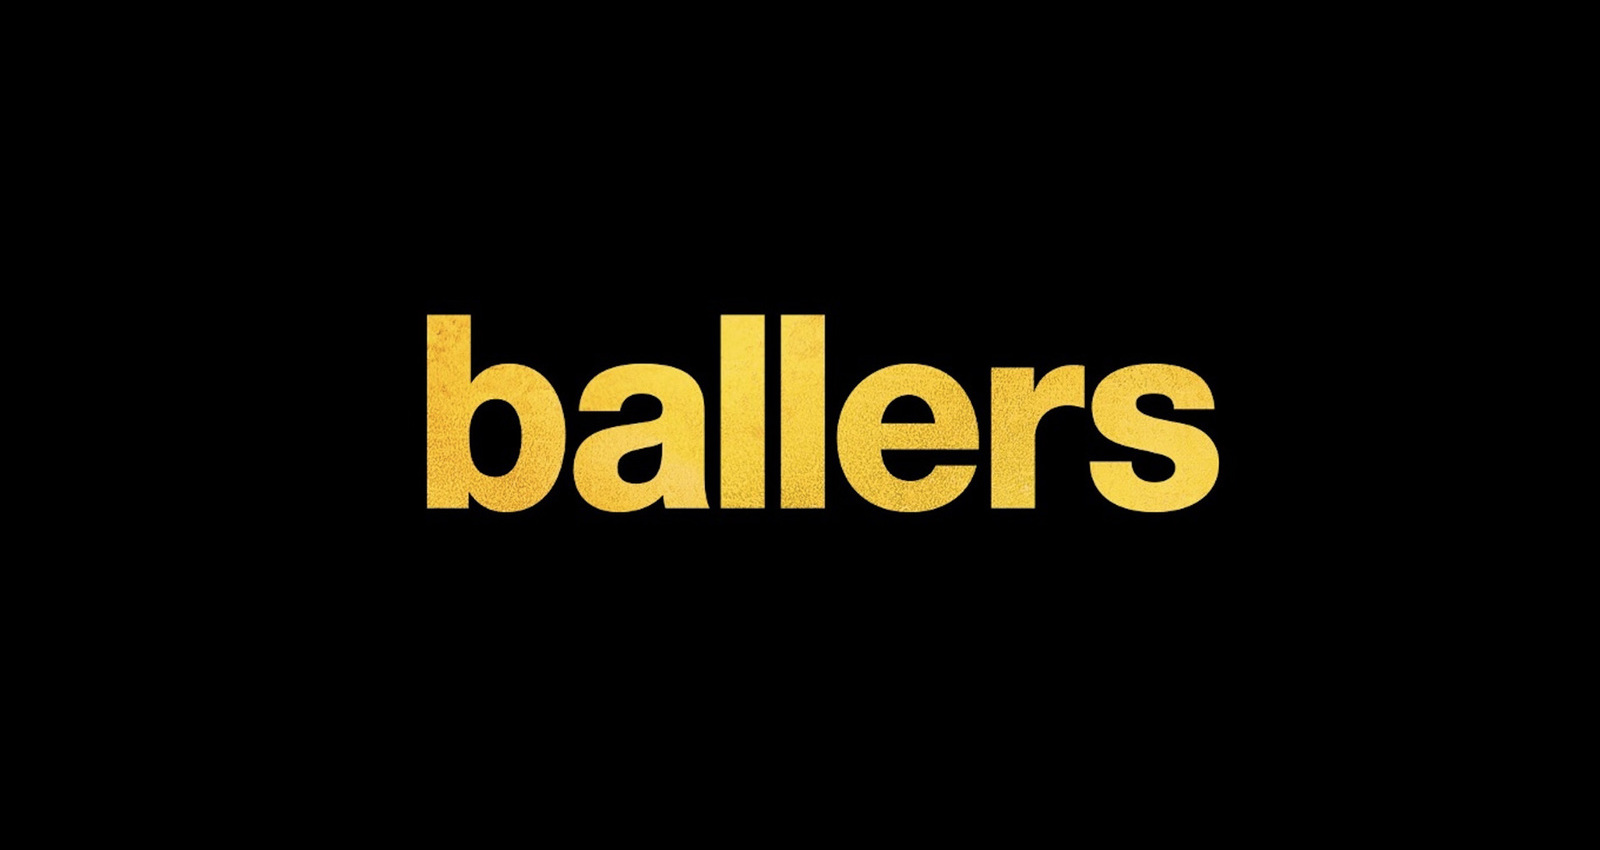 #BallersIntroContest